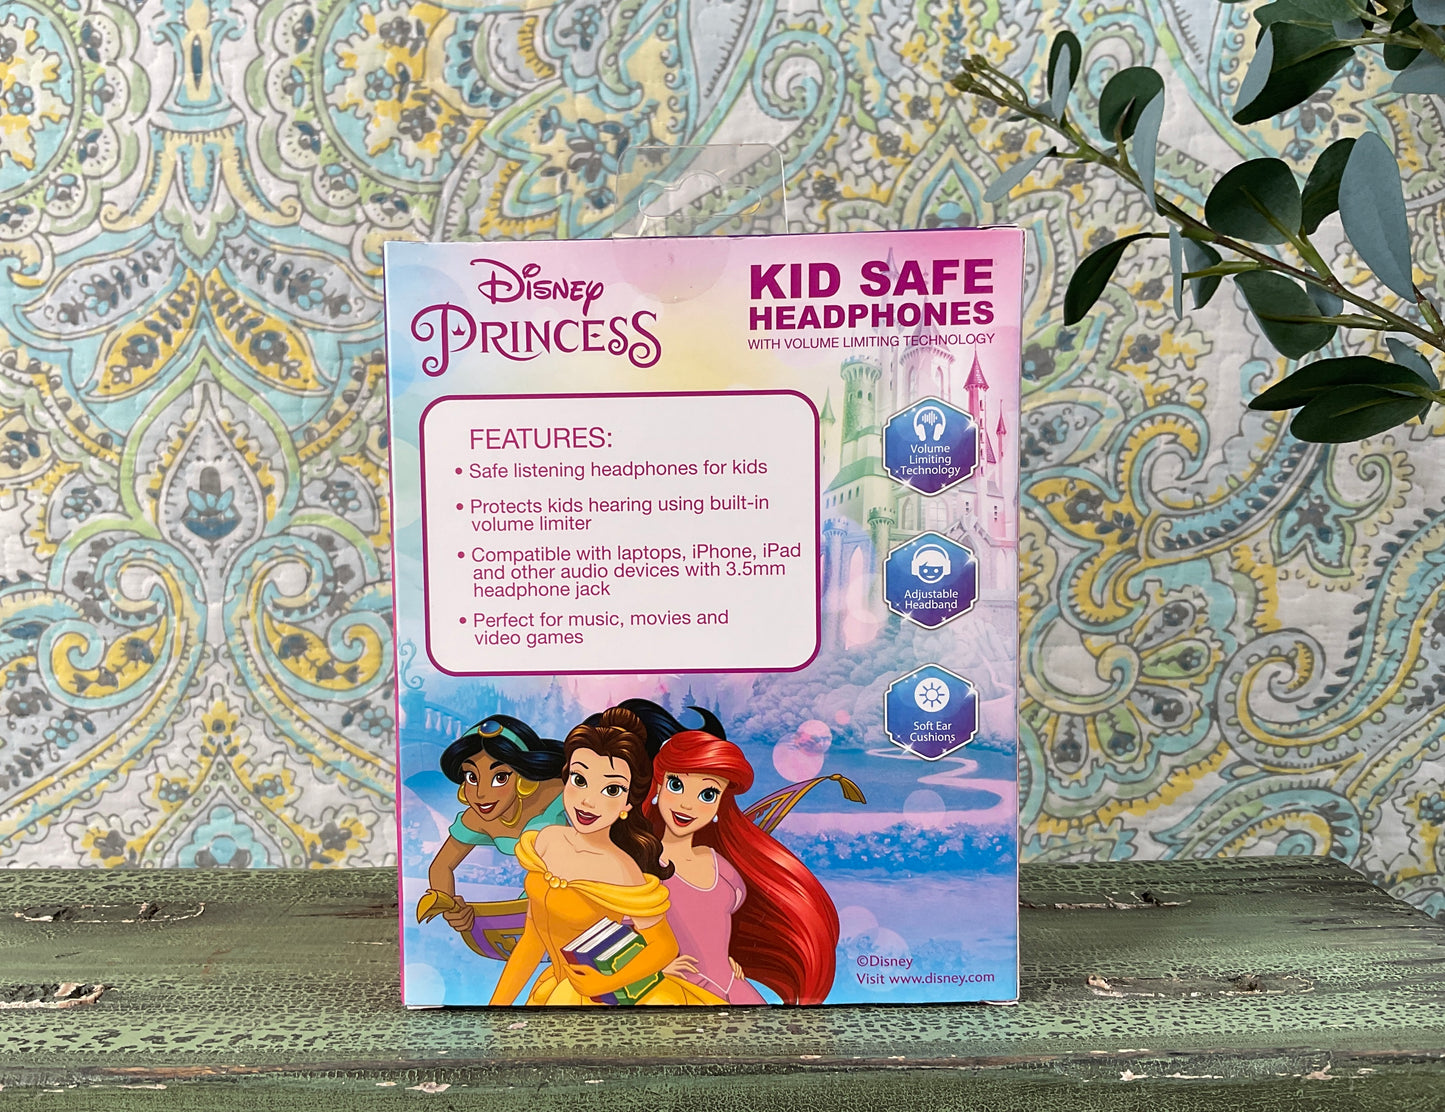 Disney Princess Kid Safe Headphones